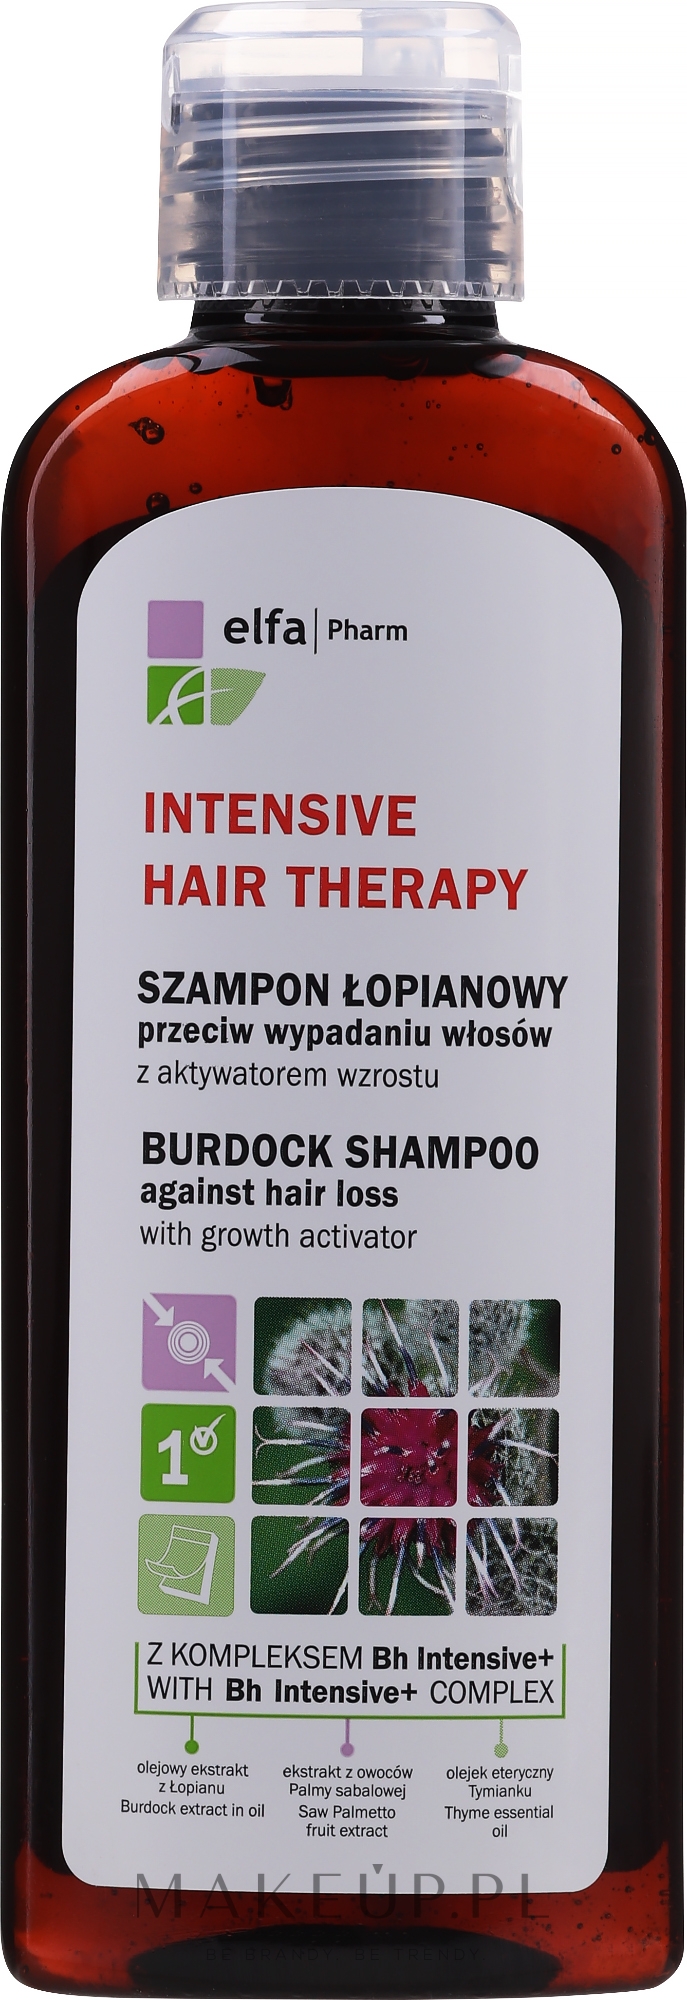 elfa pharm intensive hair therapy skład szampon